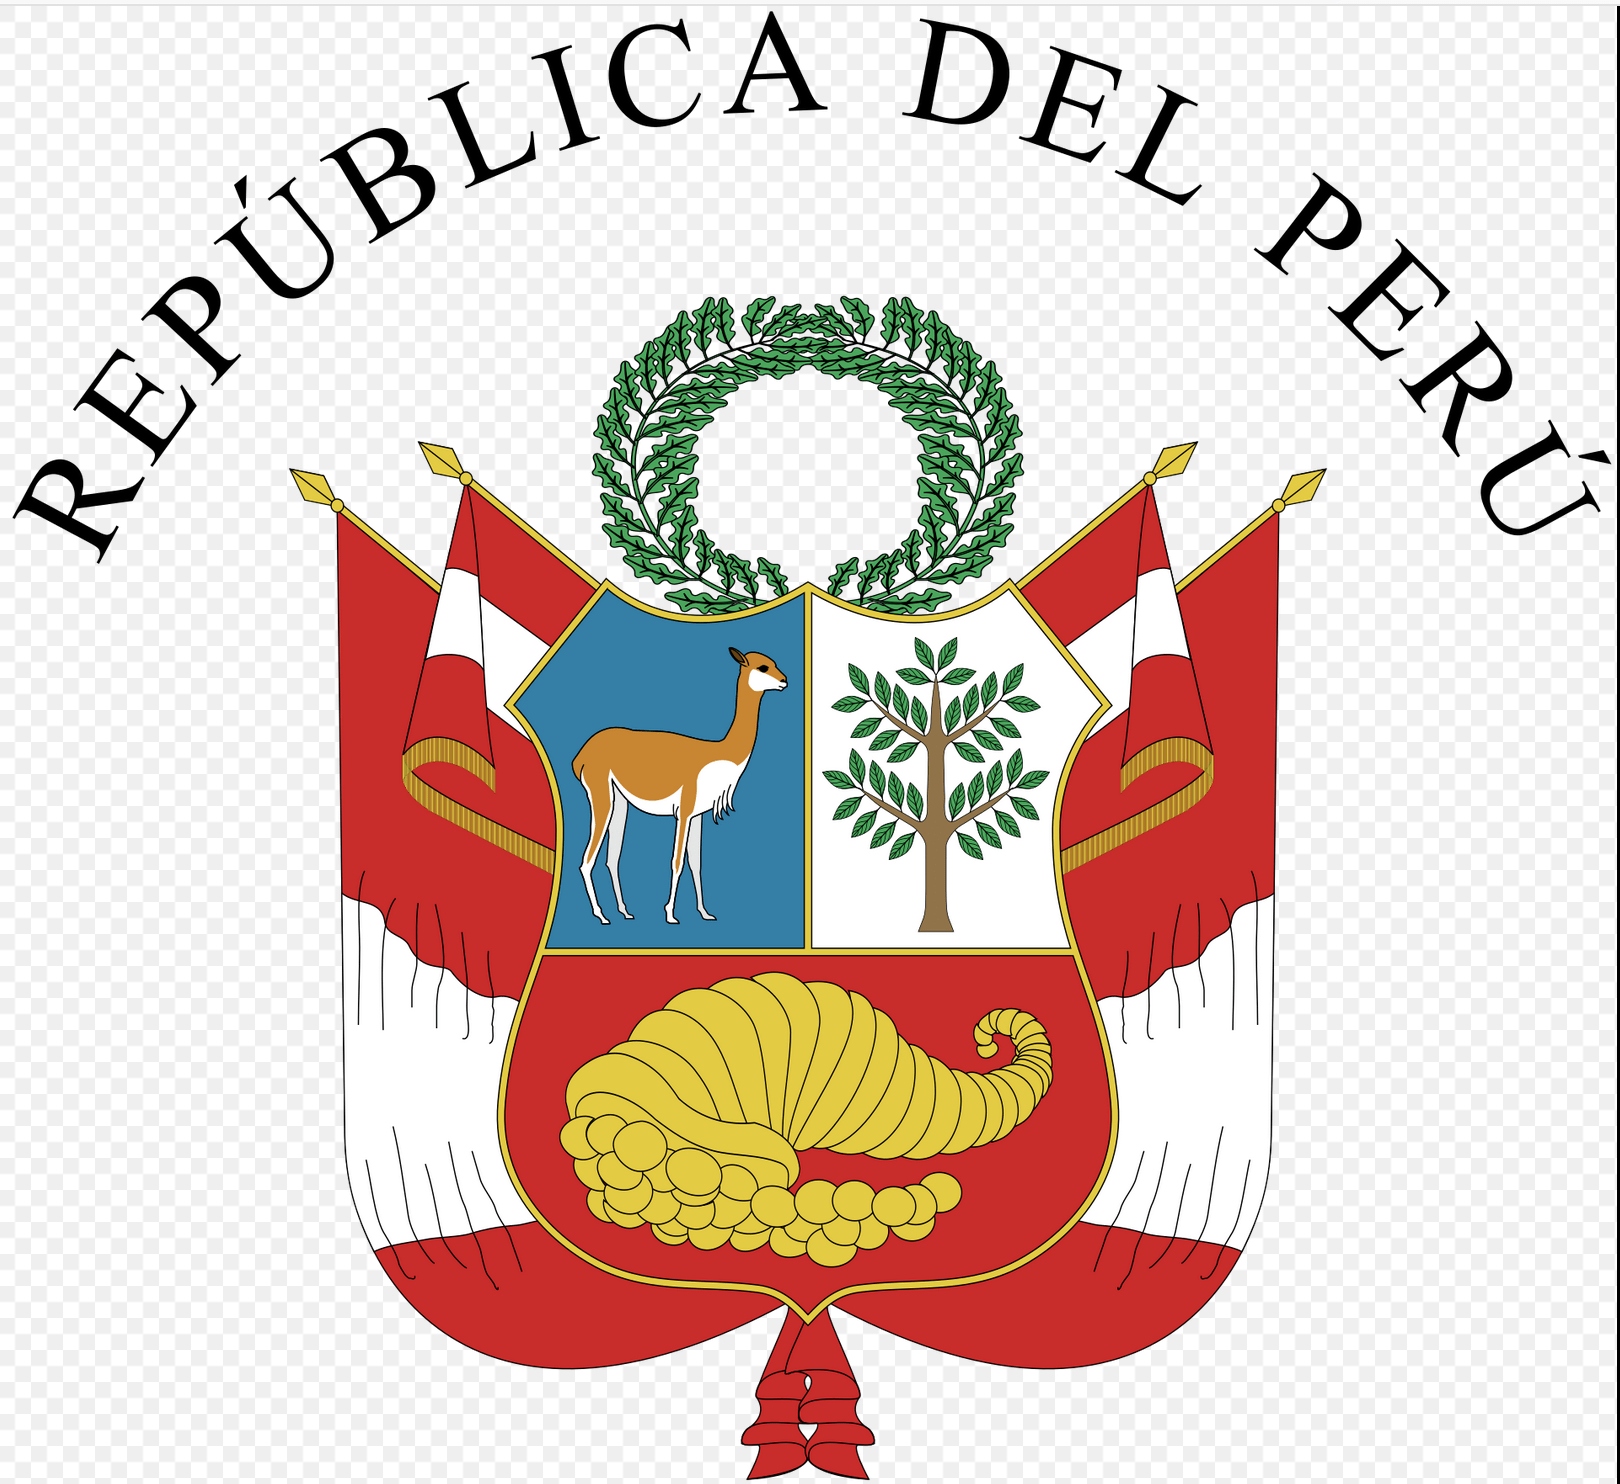 Peruvian Legislation Law 29733 Law of Data Privacy Protection